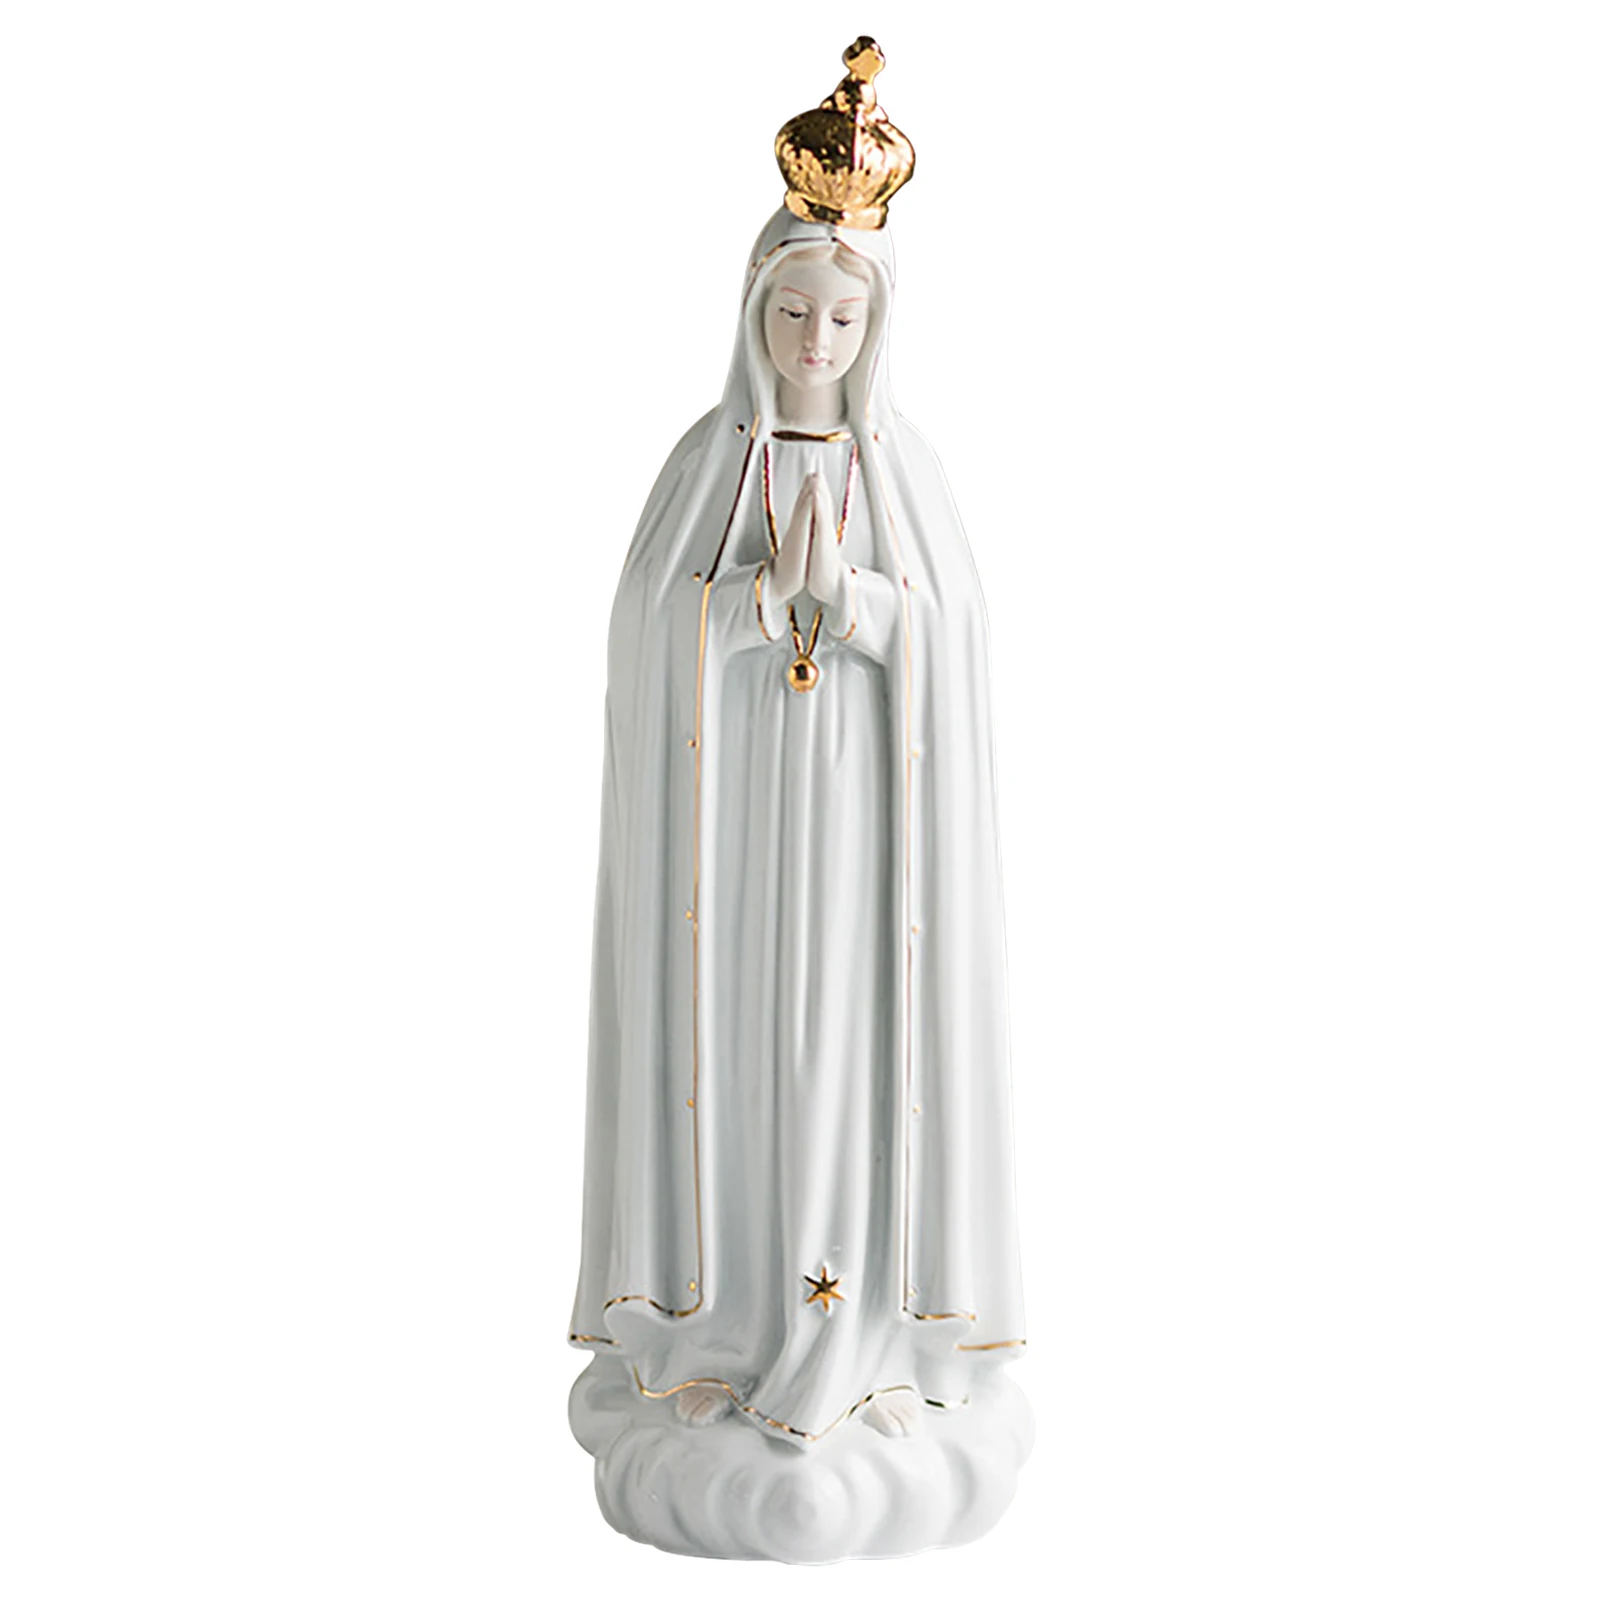 

Ceramic Catholic Statue Our Lady Of Fatima Statue Virgin Mary Figure For Home Tabletop Catholic Home Decor Statue Resin Figurine